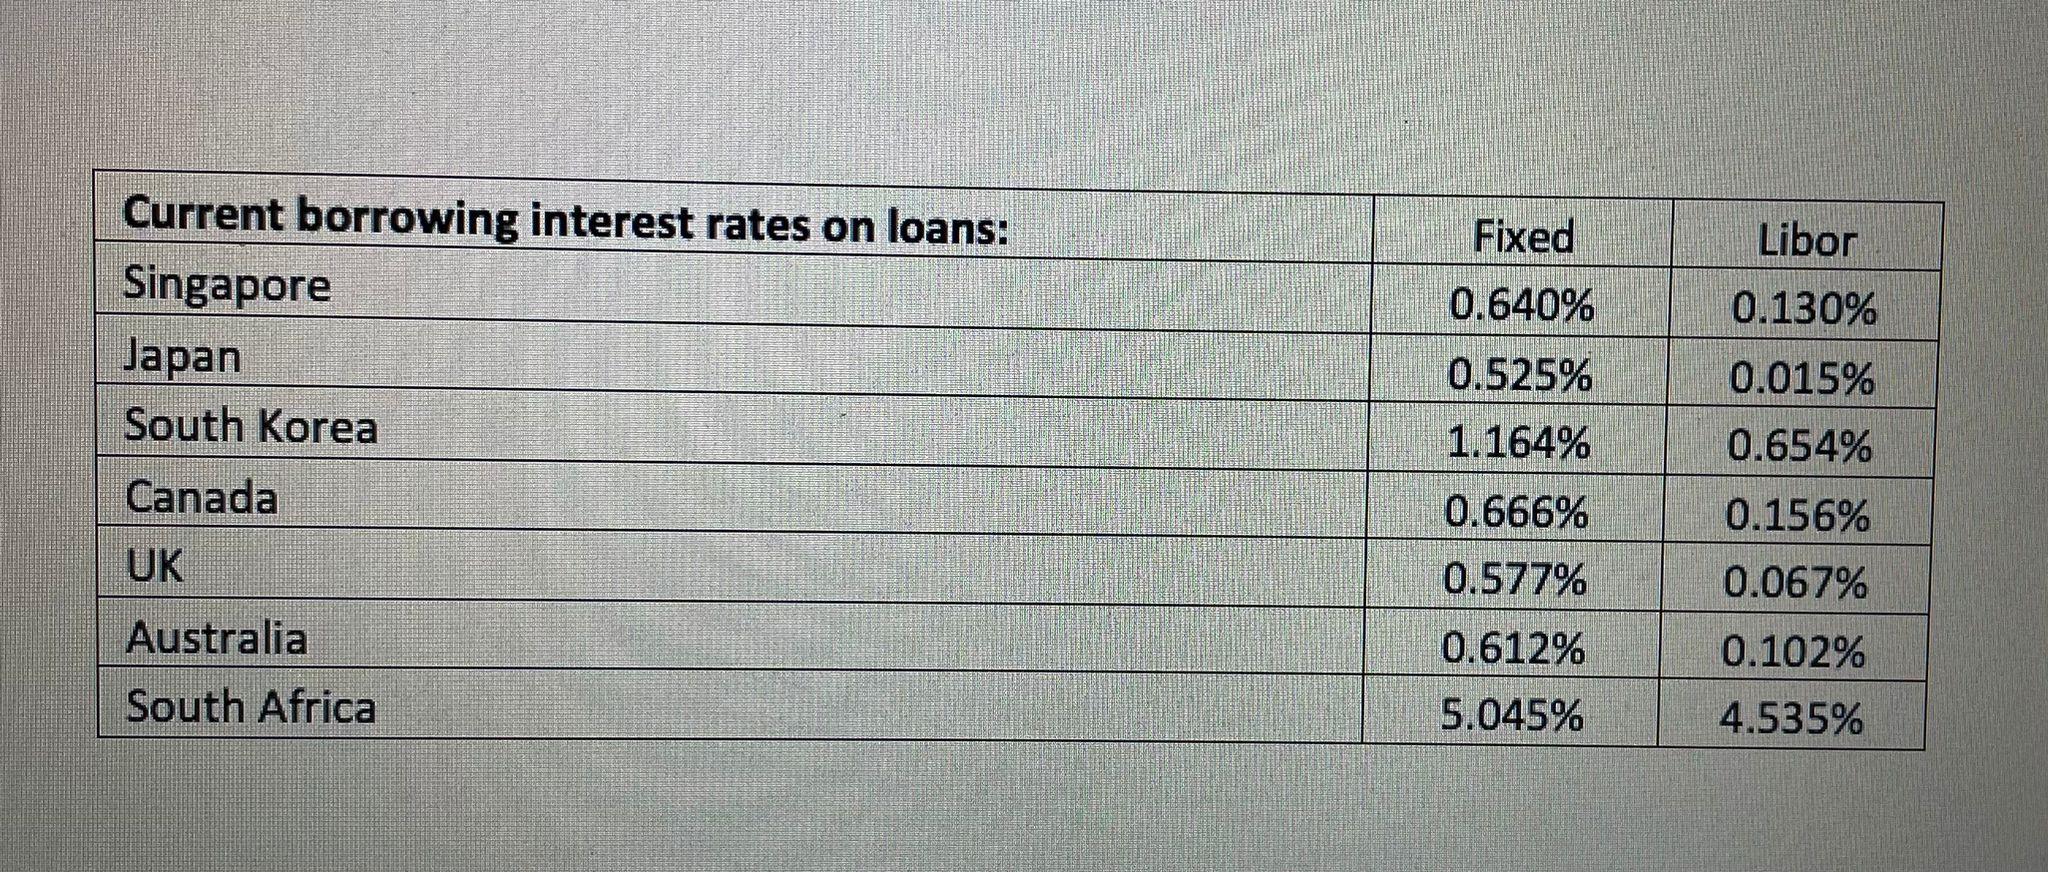 Current borrowing interest rates on loans: Singapore Japan South Korea Canada UK Australia South Africa Fixed